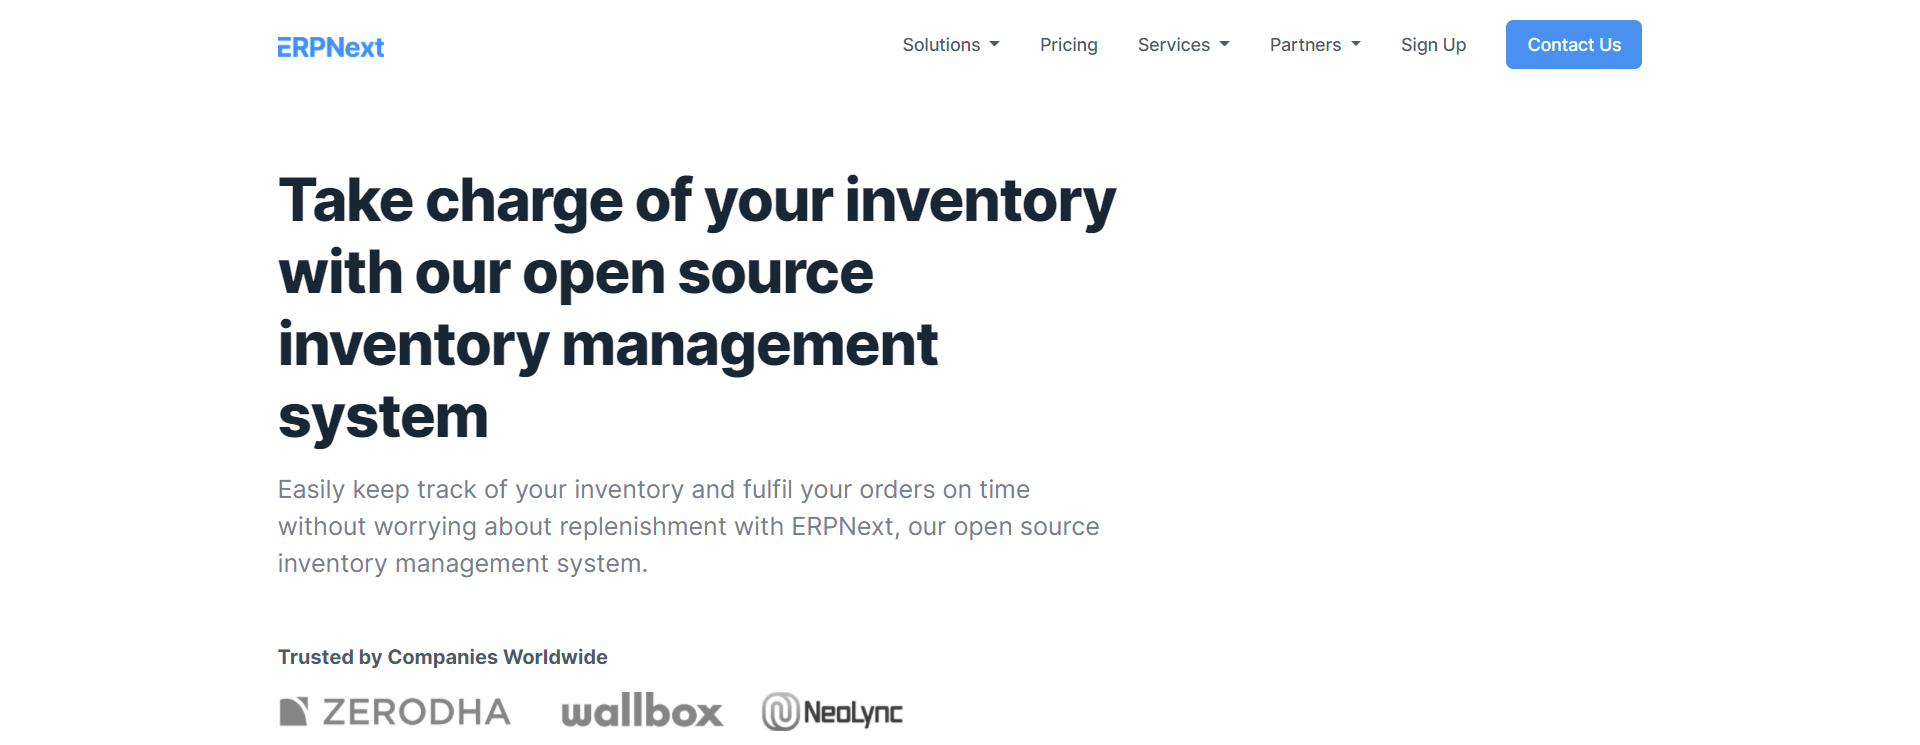 erpnext inventory management software